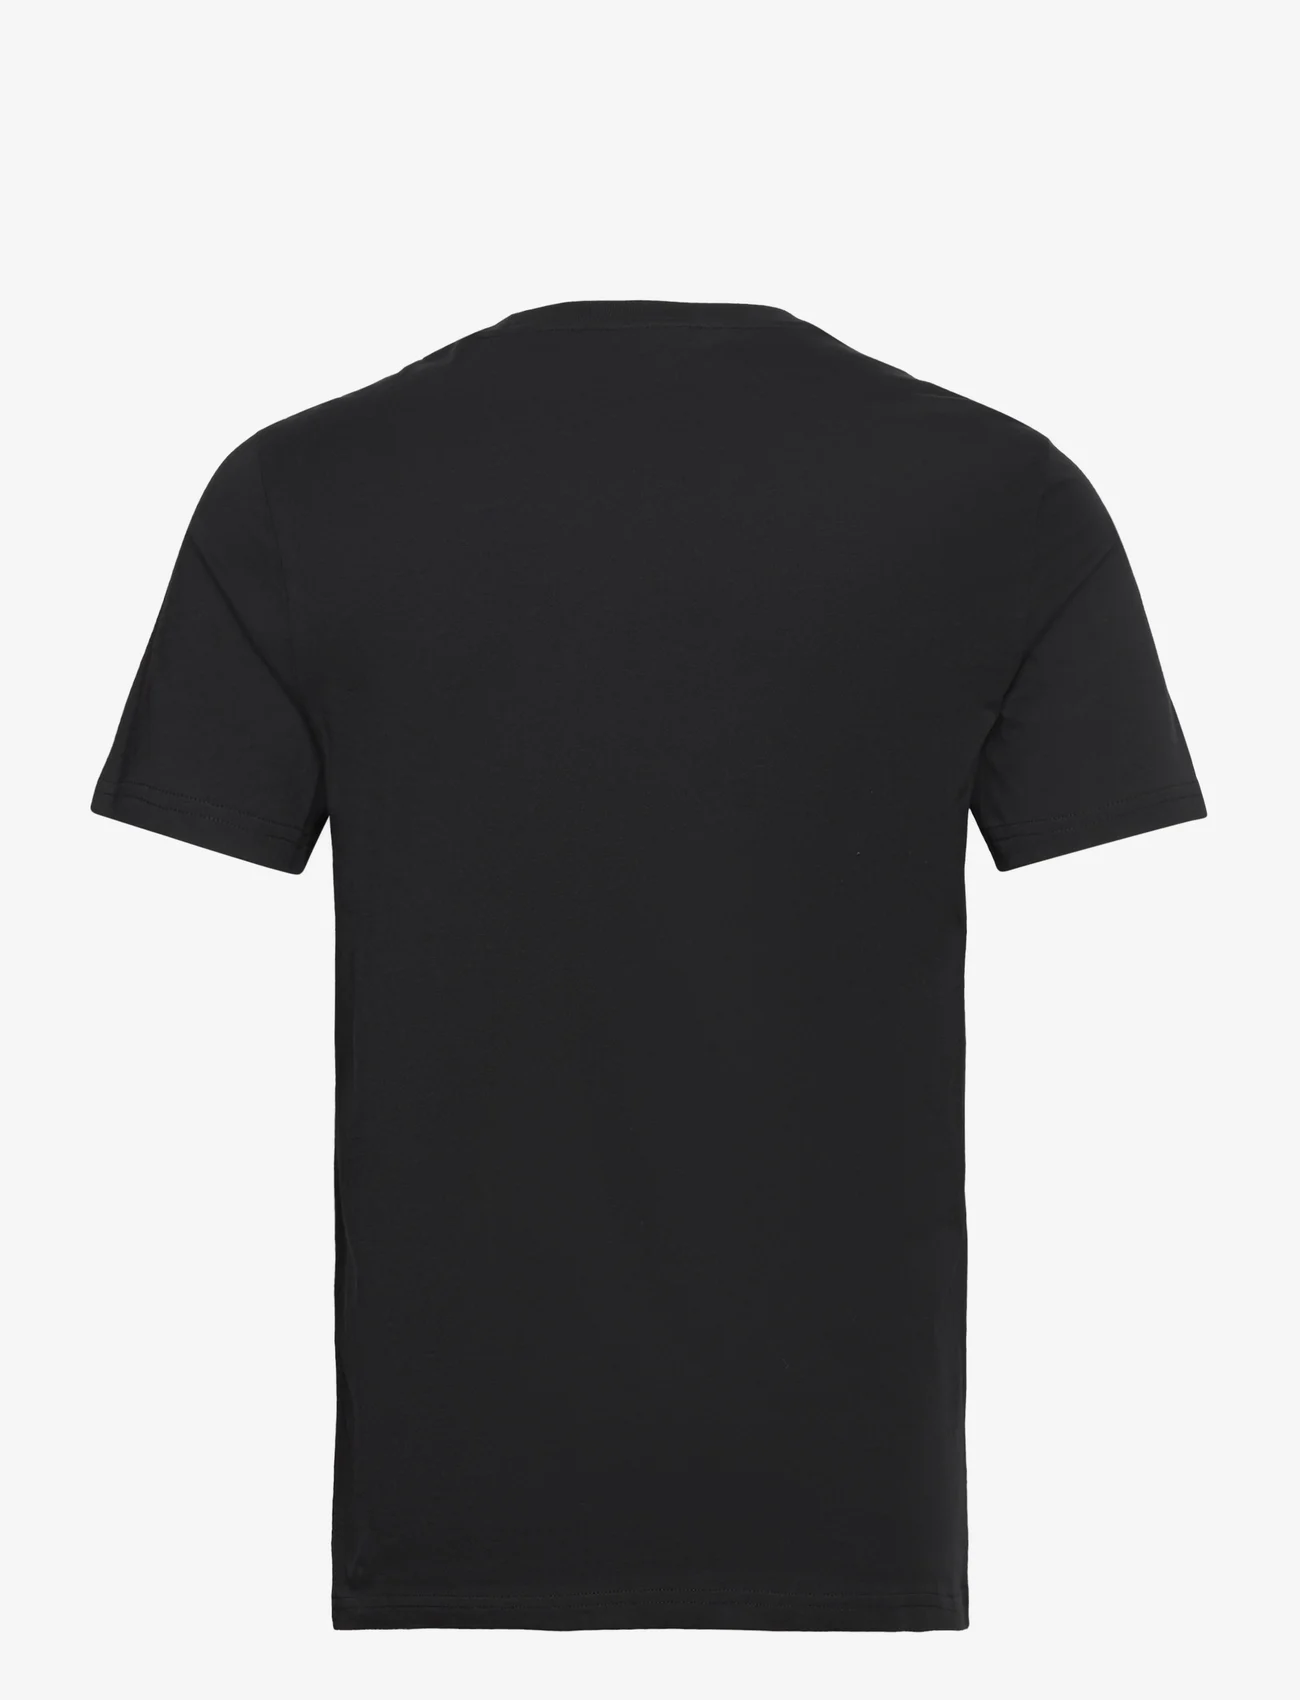 J. Lindeberg - M Cotton Blend T-shirt - short-sleeved t-shirts - black - 1